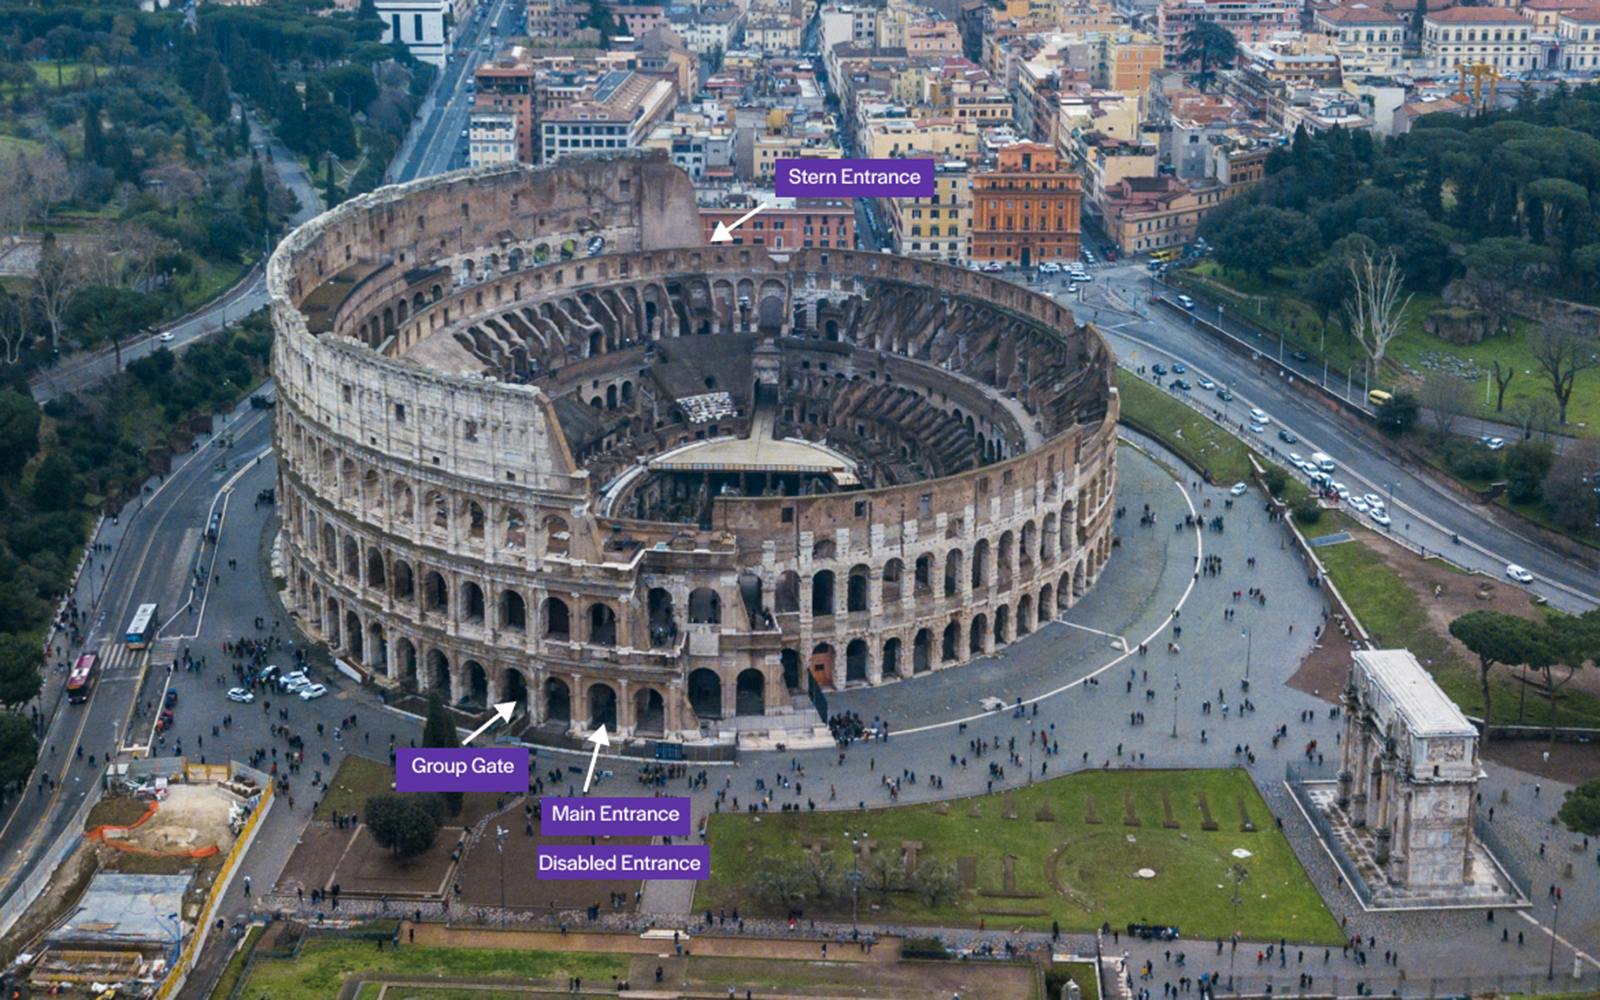 Colosseum tickets